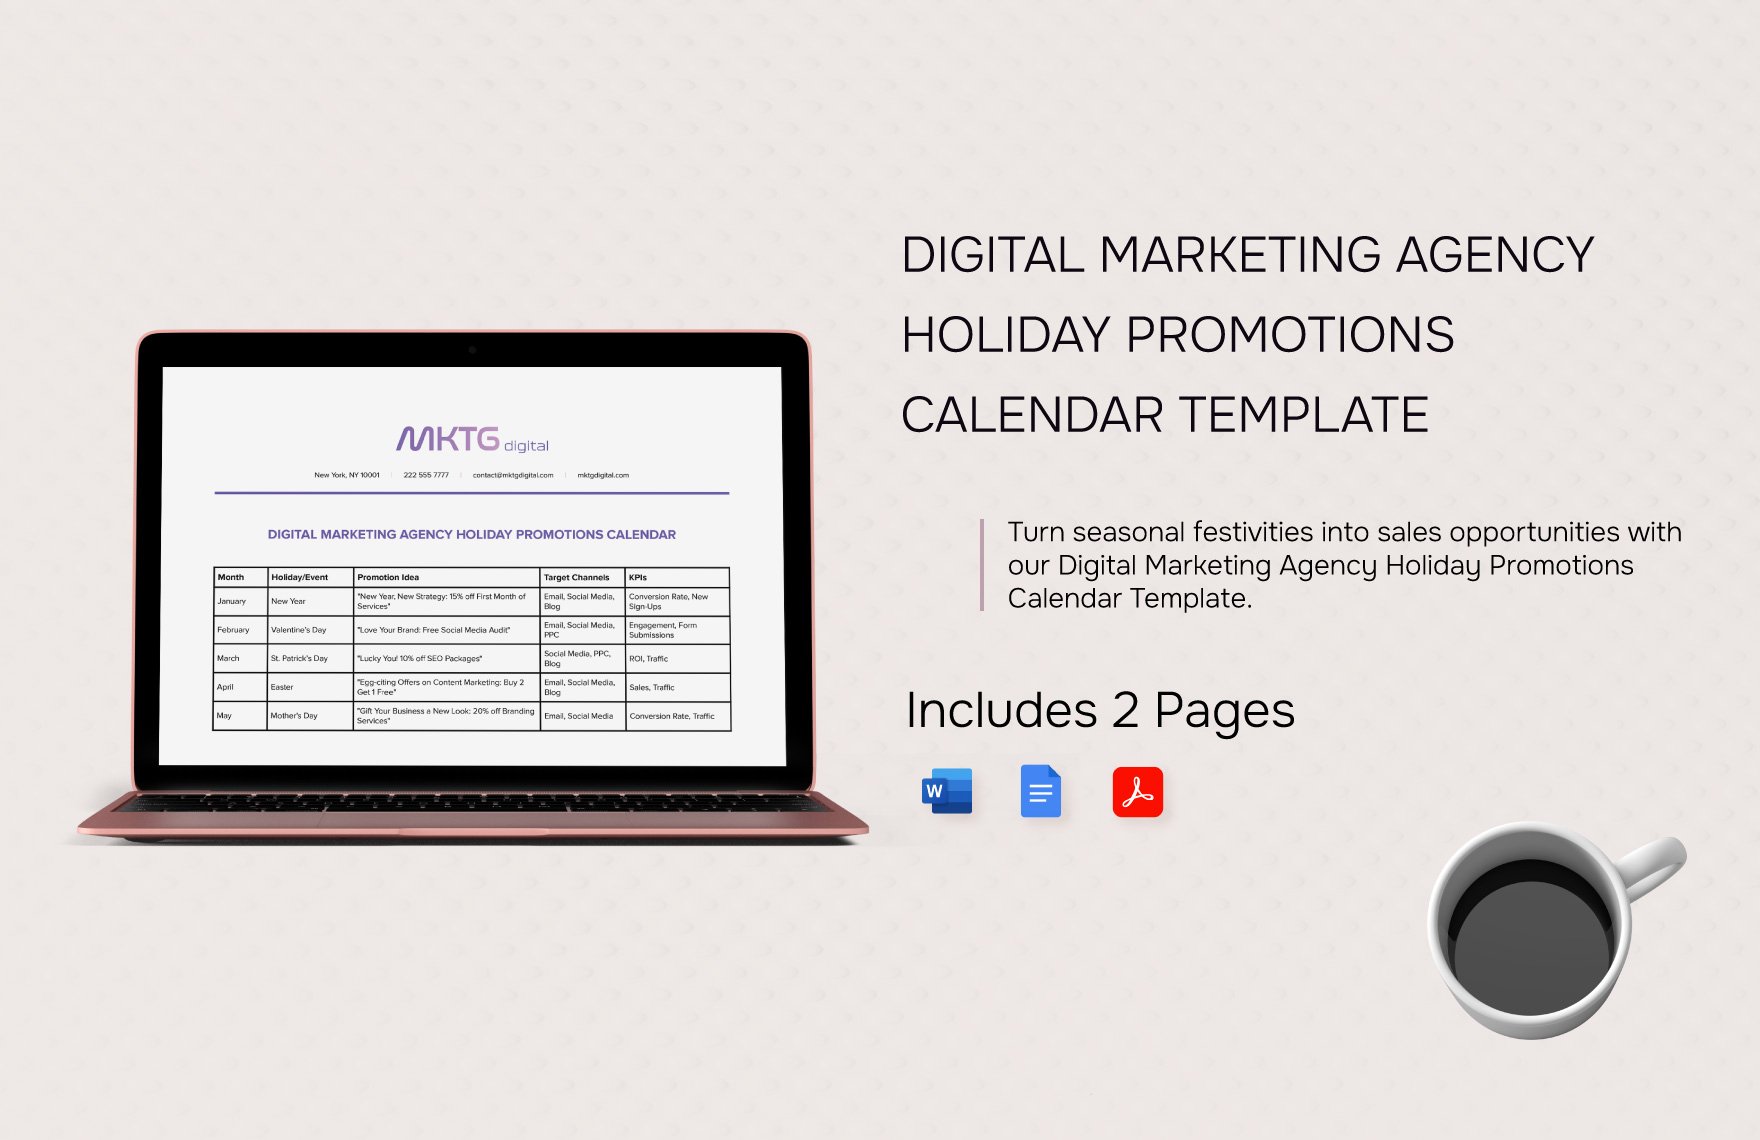 Digital Marketing Agency Holiday Promotions Calendar Template